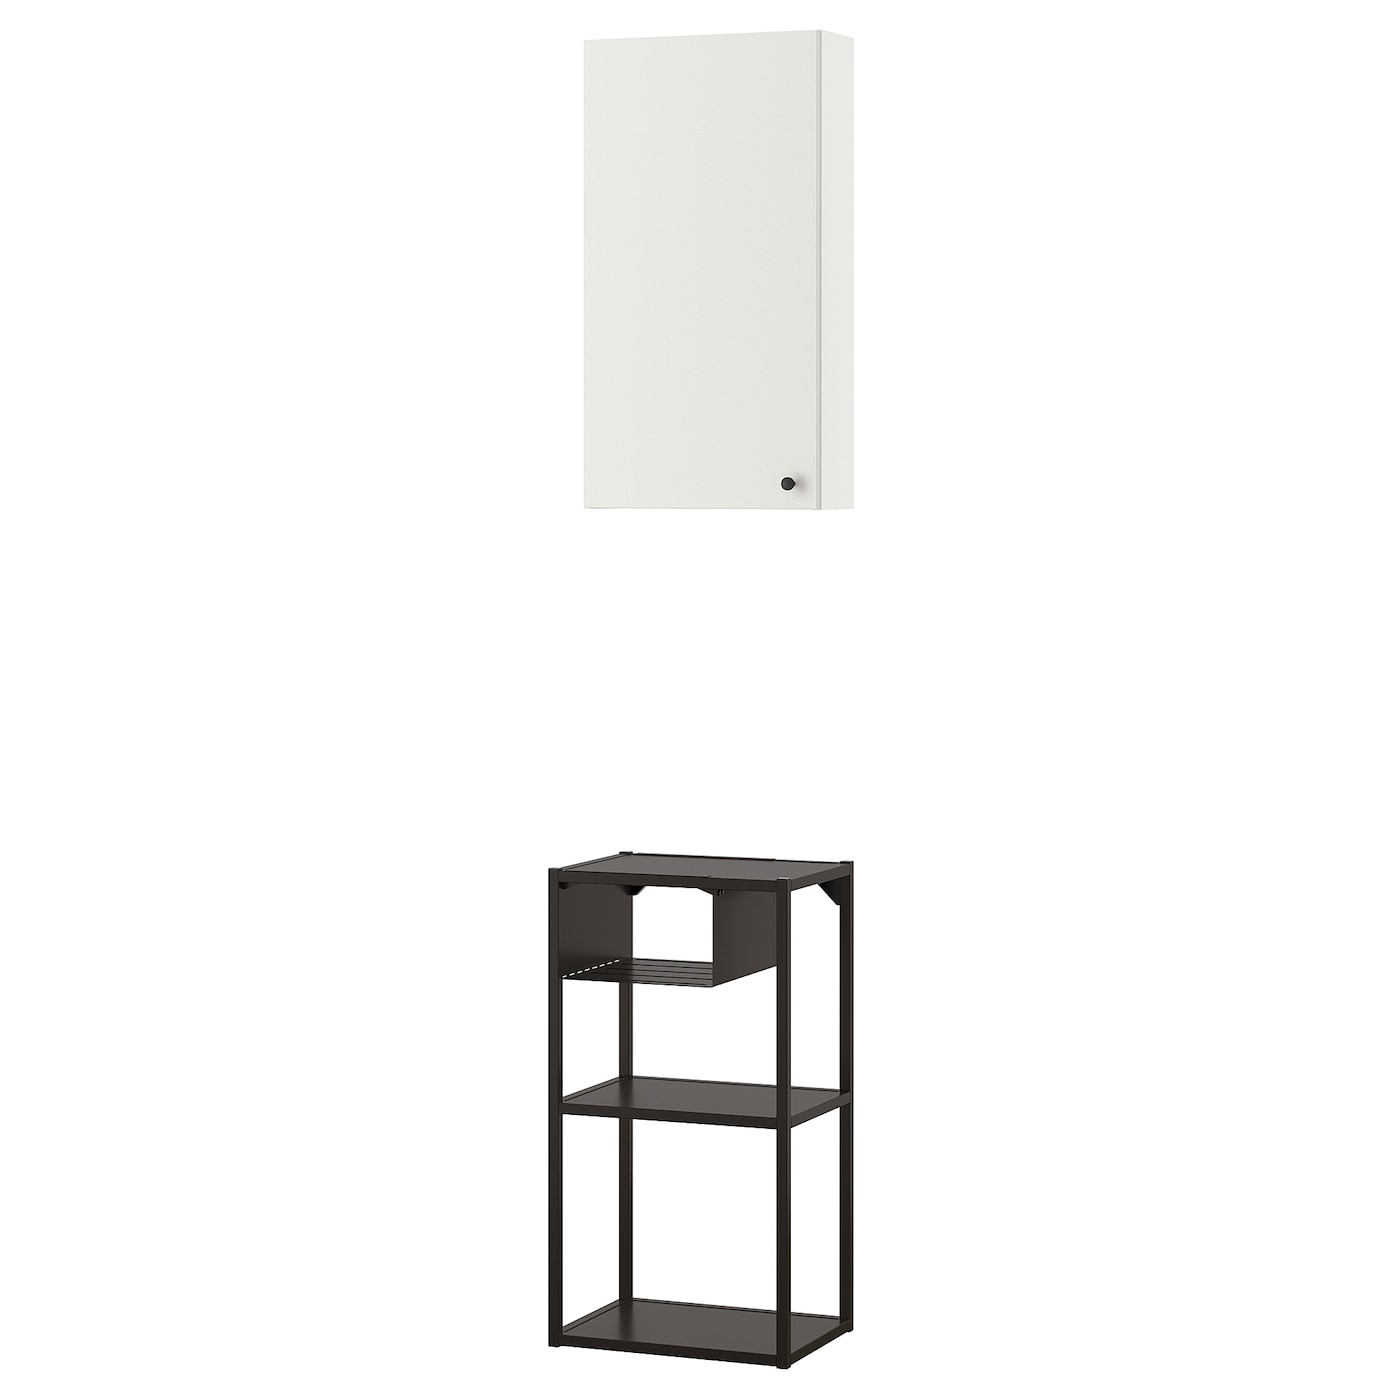 Комбинация для хранения - IKEA ENHET/ЭНХЕТ ИКЕА, 40х30х150 см, белый/антрацит